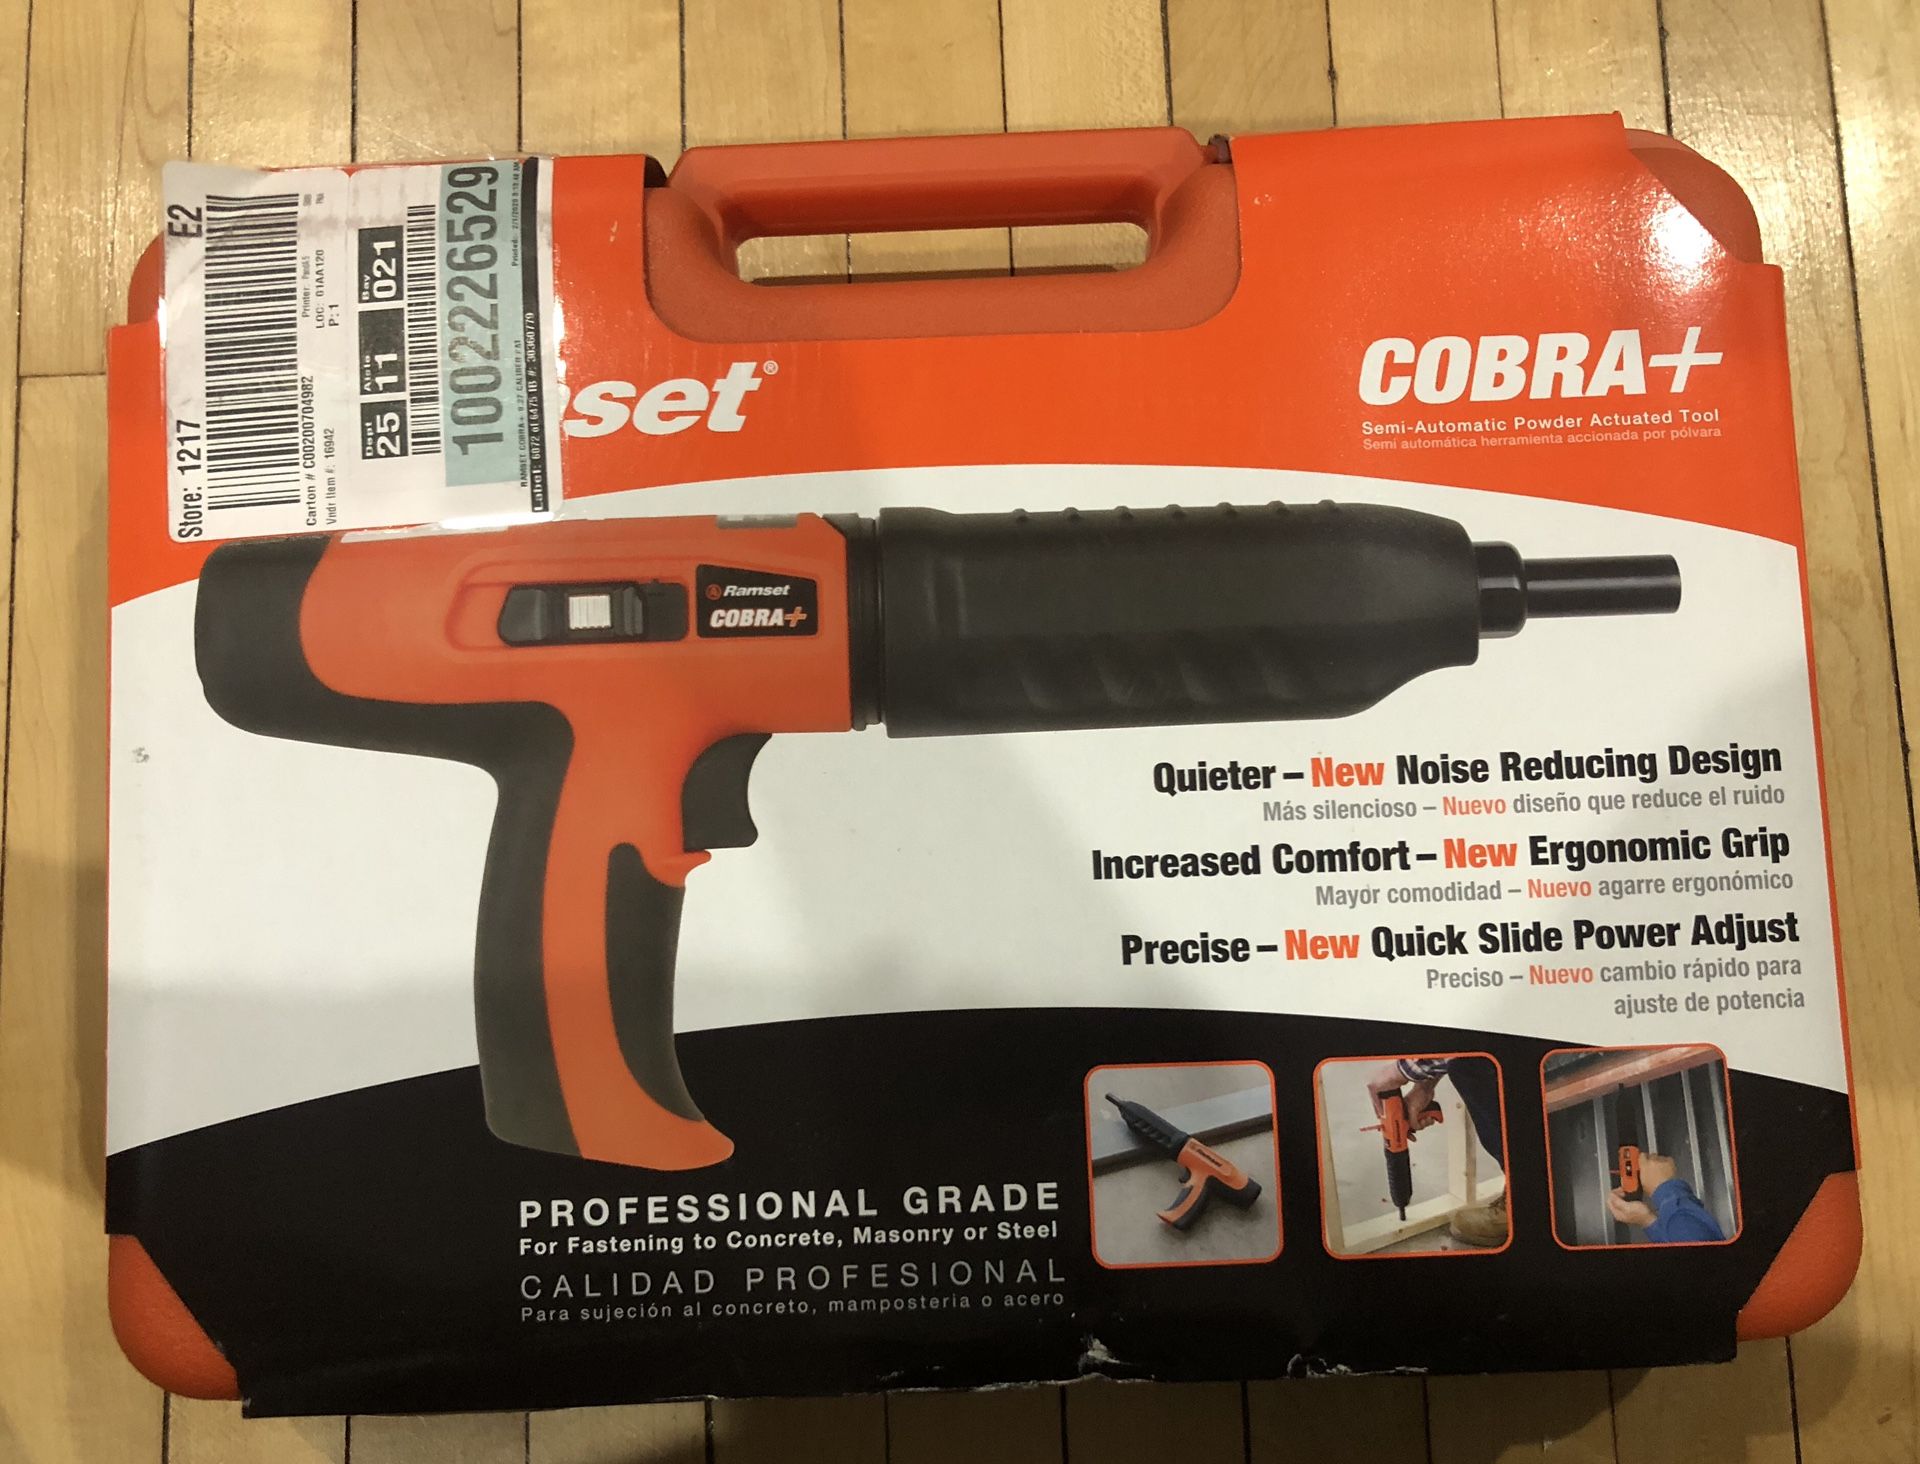 Ramset Cobra + Professional Grade Nail Gun Powder Actuated